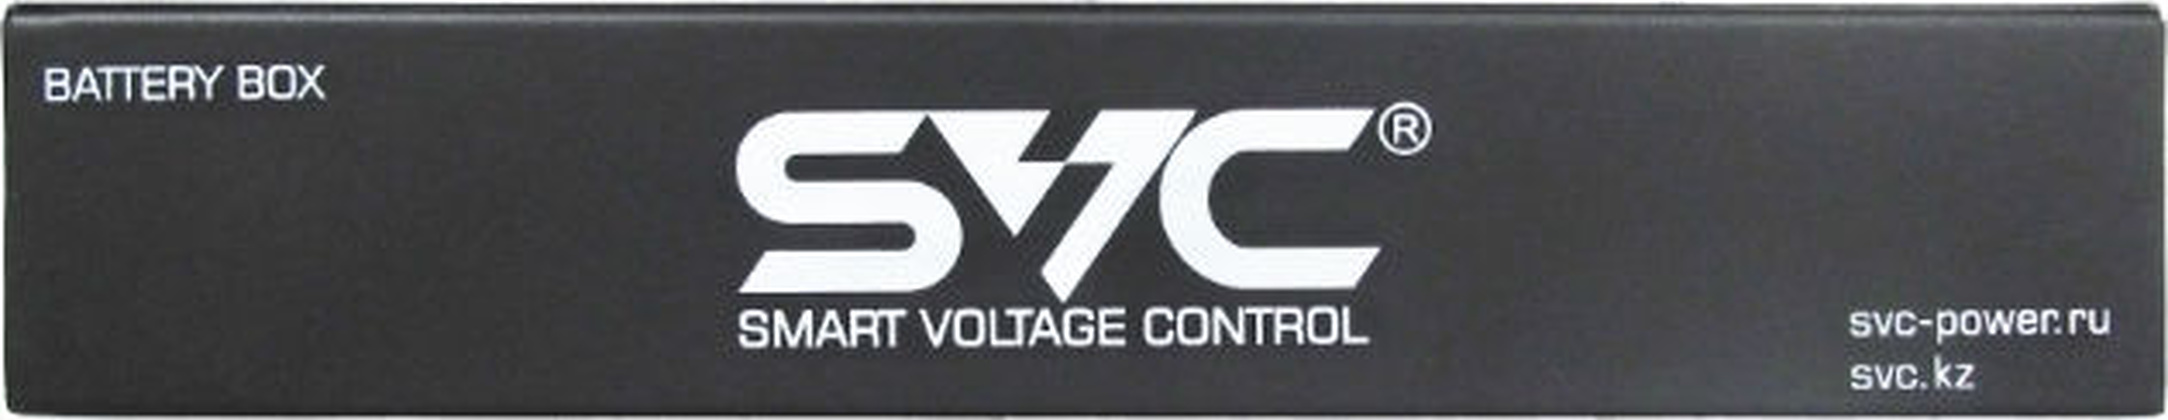 Батарейный блок для ИБП SVC [BAT08-48V-9AH-R]